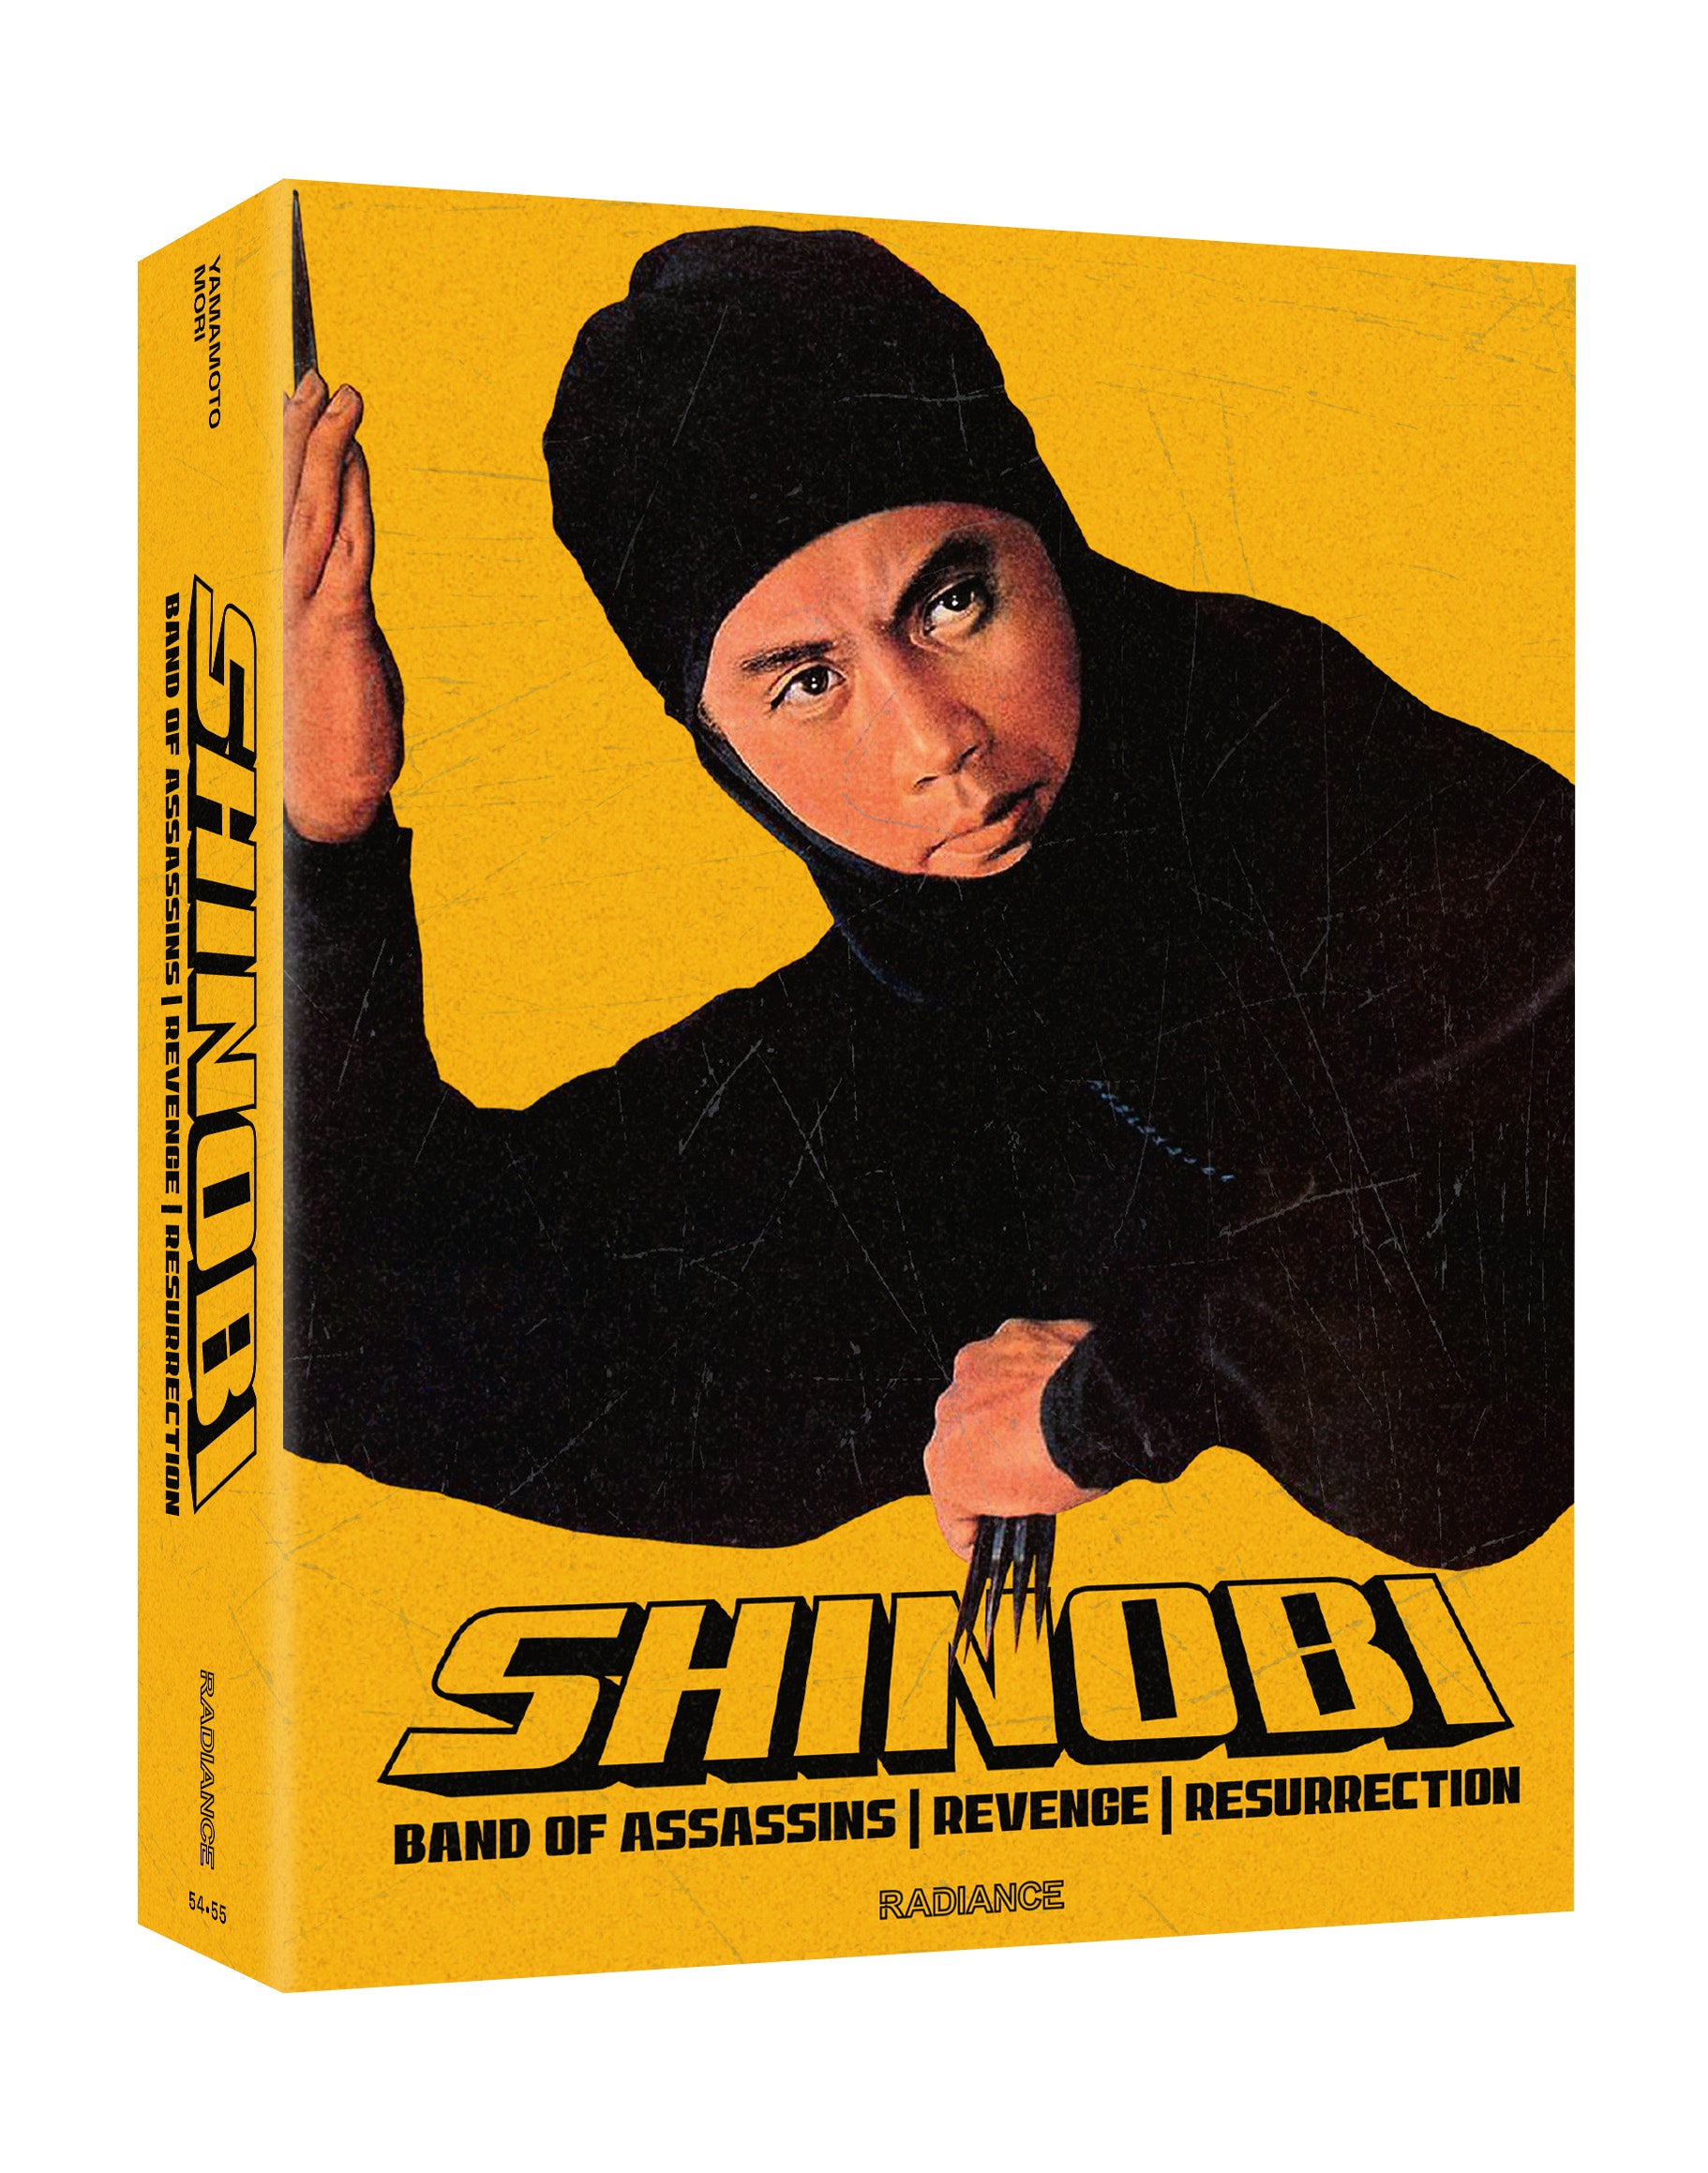 Shinobi Blu-ray Limited Edition HardBox (Radiance U.S.) – The 